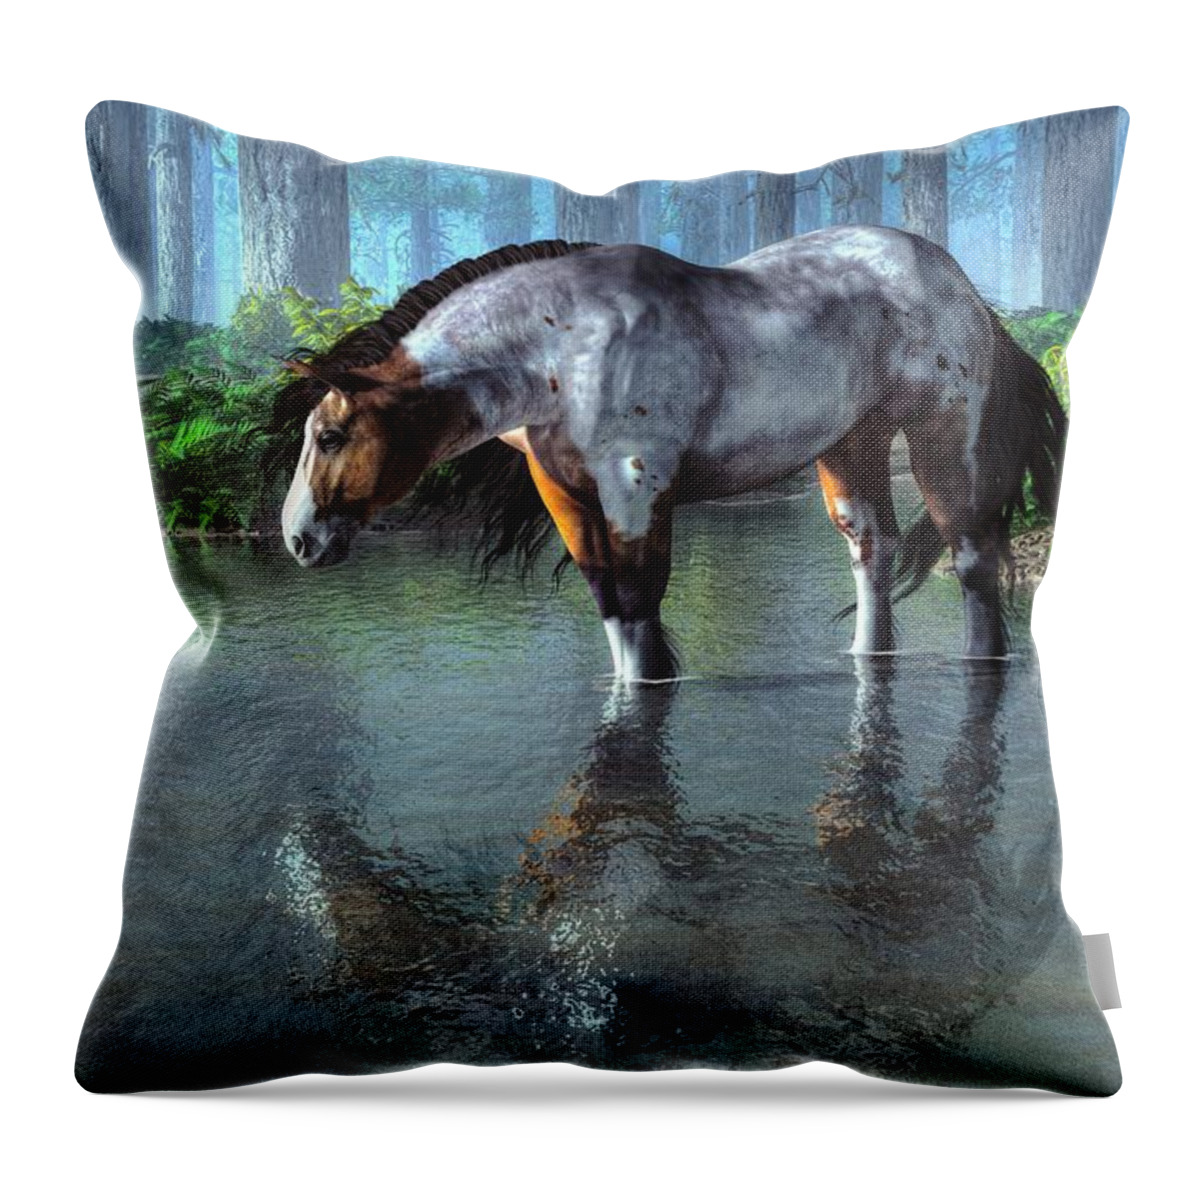 Wading Horse Throw Pillow featuring the digital art Wading Horse by Daniel Eskridge